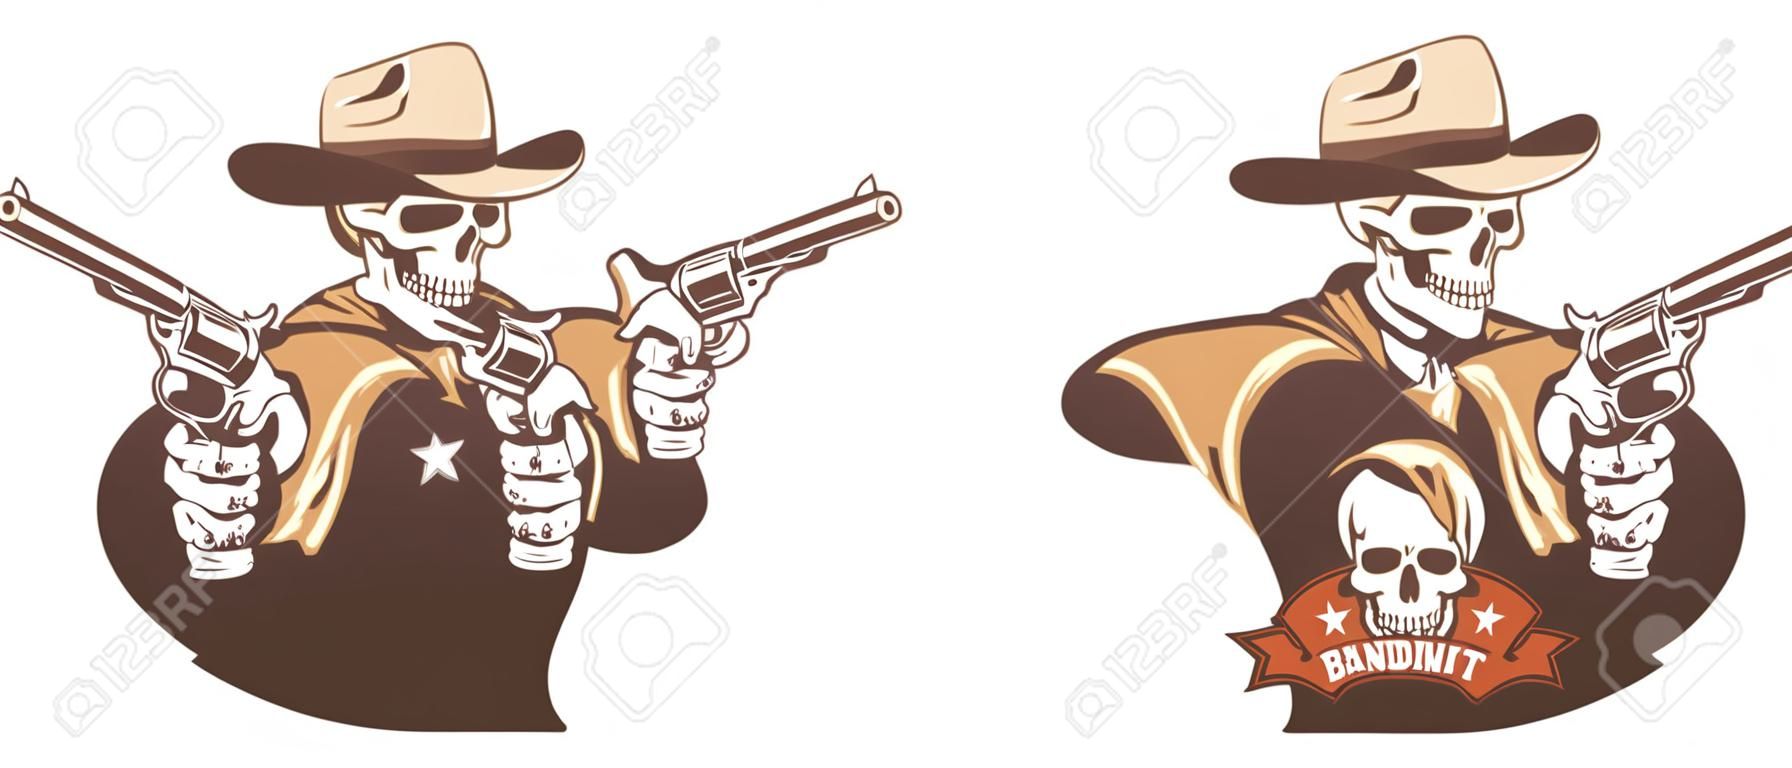 Skull cowboy western bandit with guns